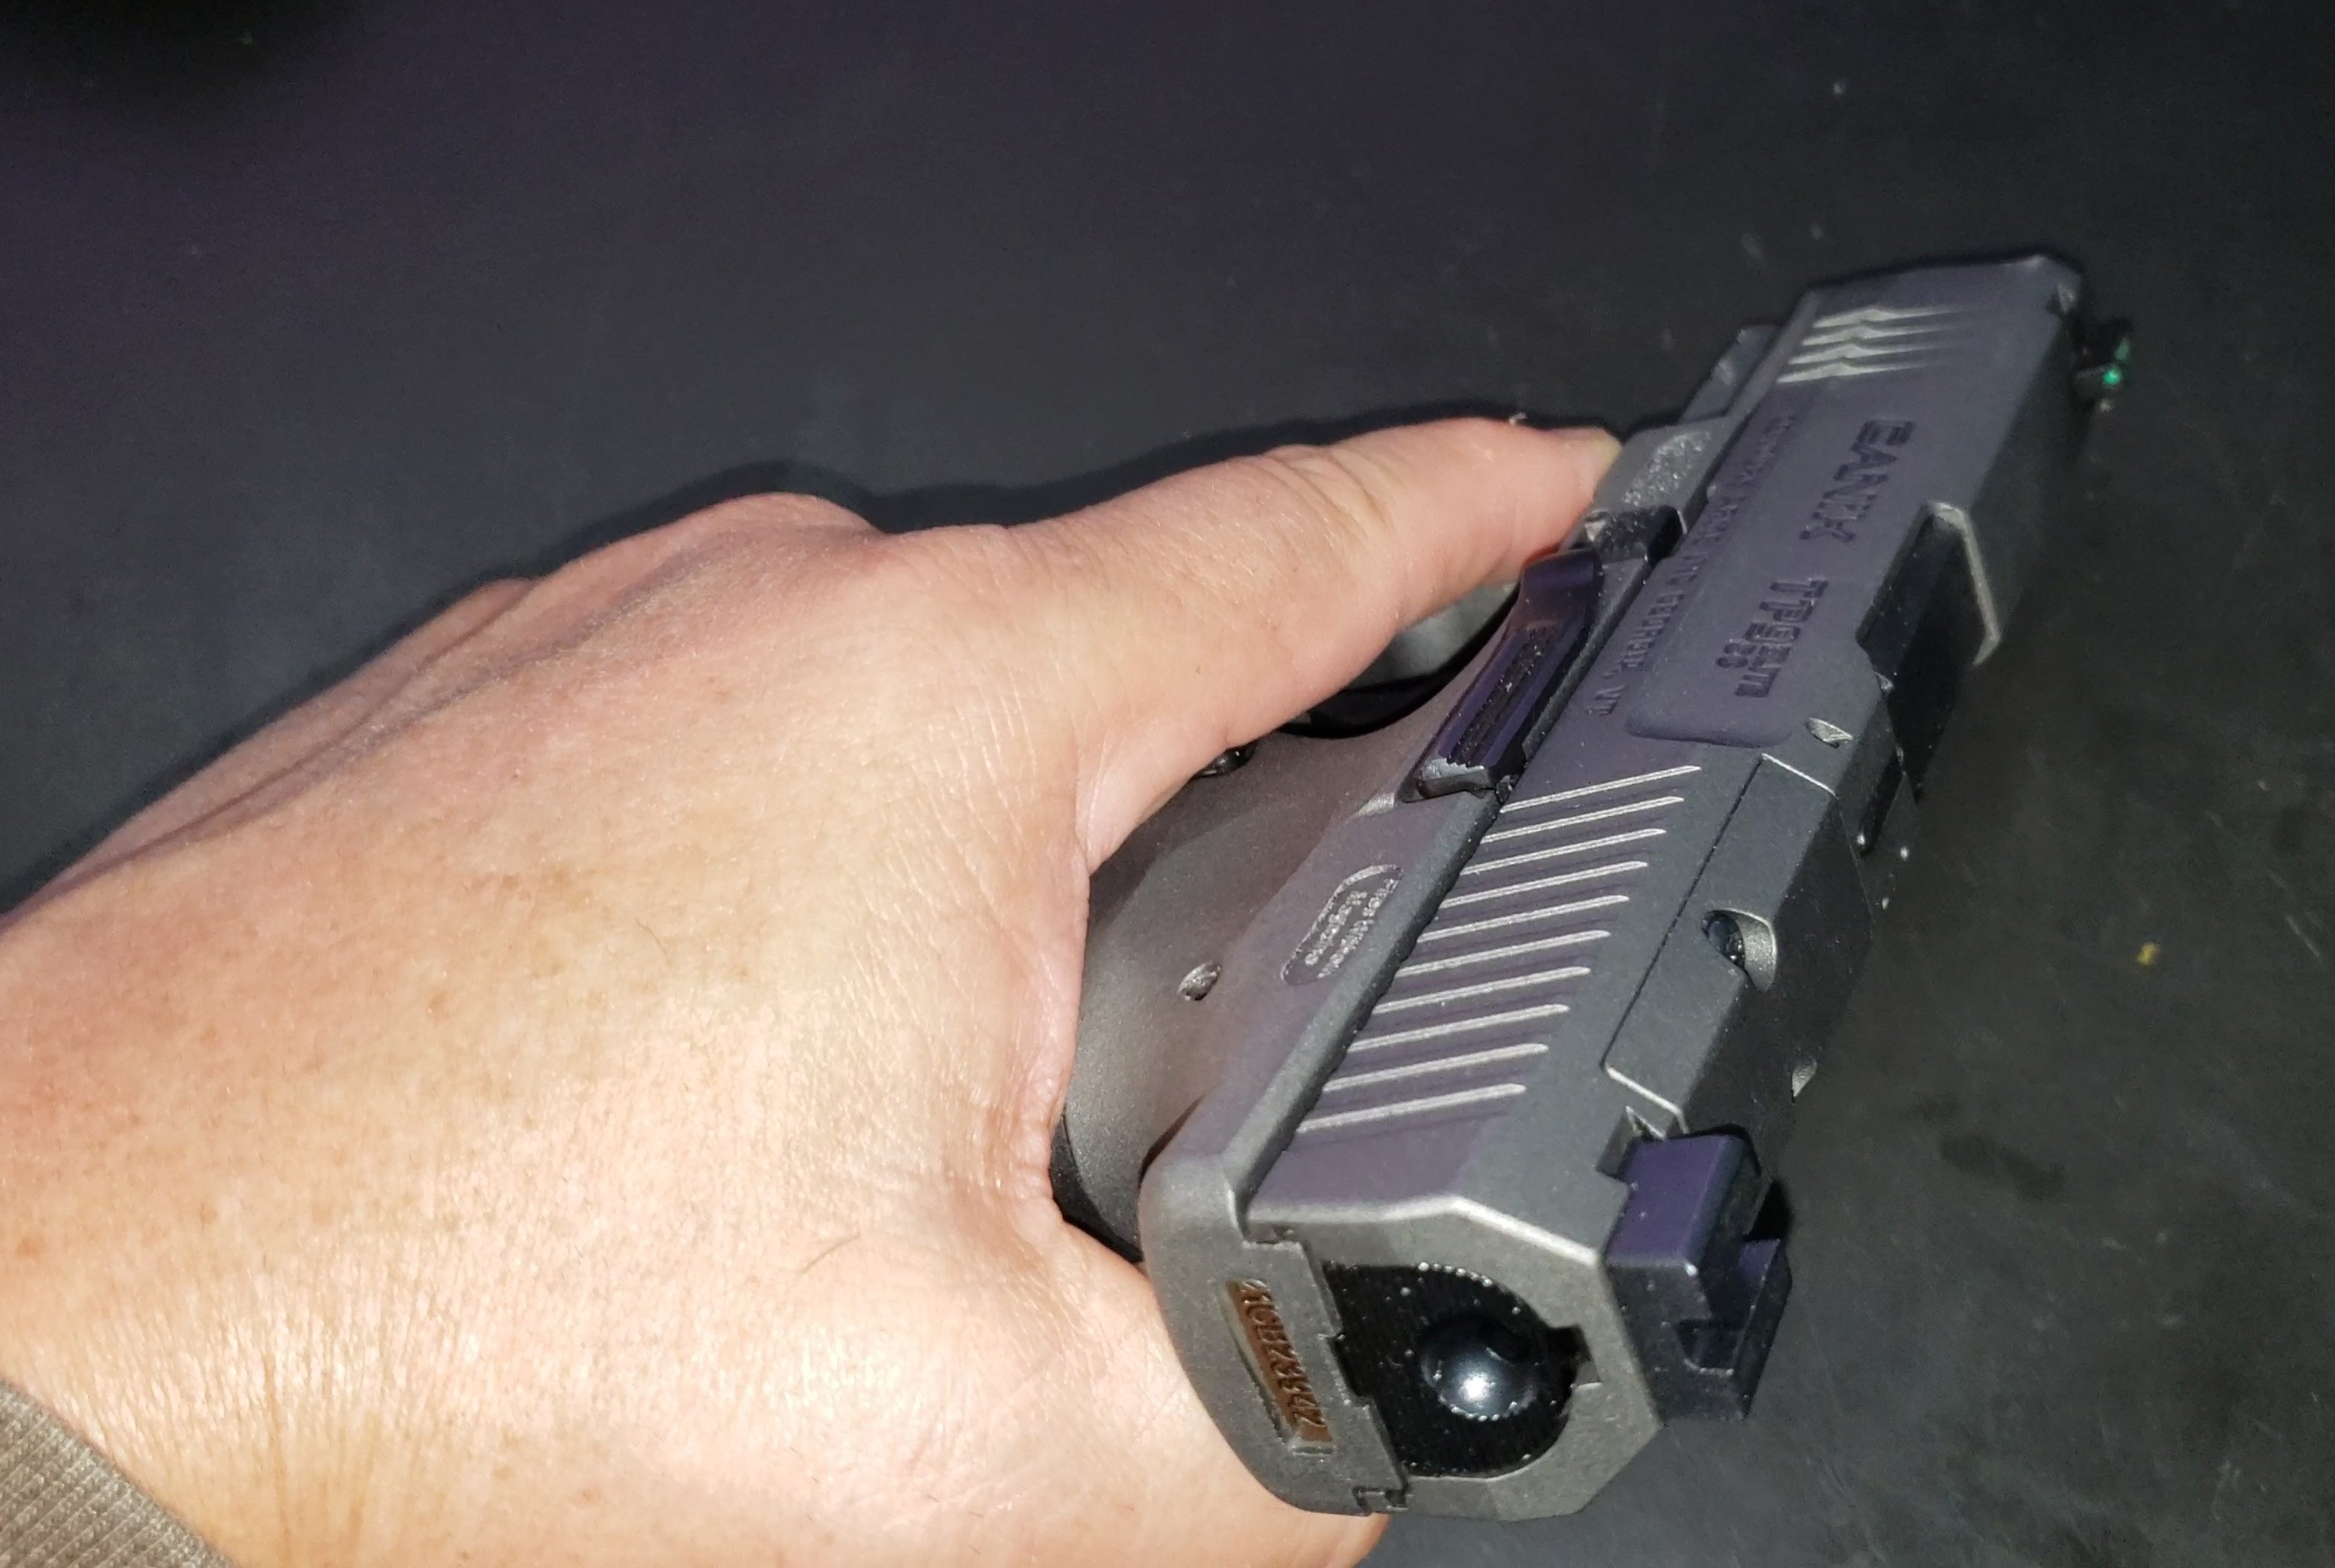 Canik TP9 Elite SC 9mm pistol angle view